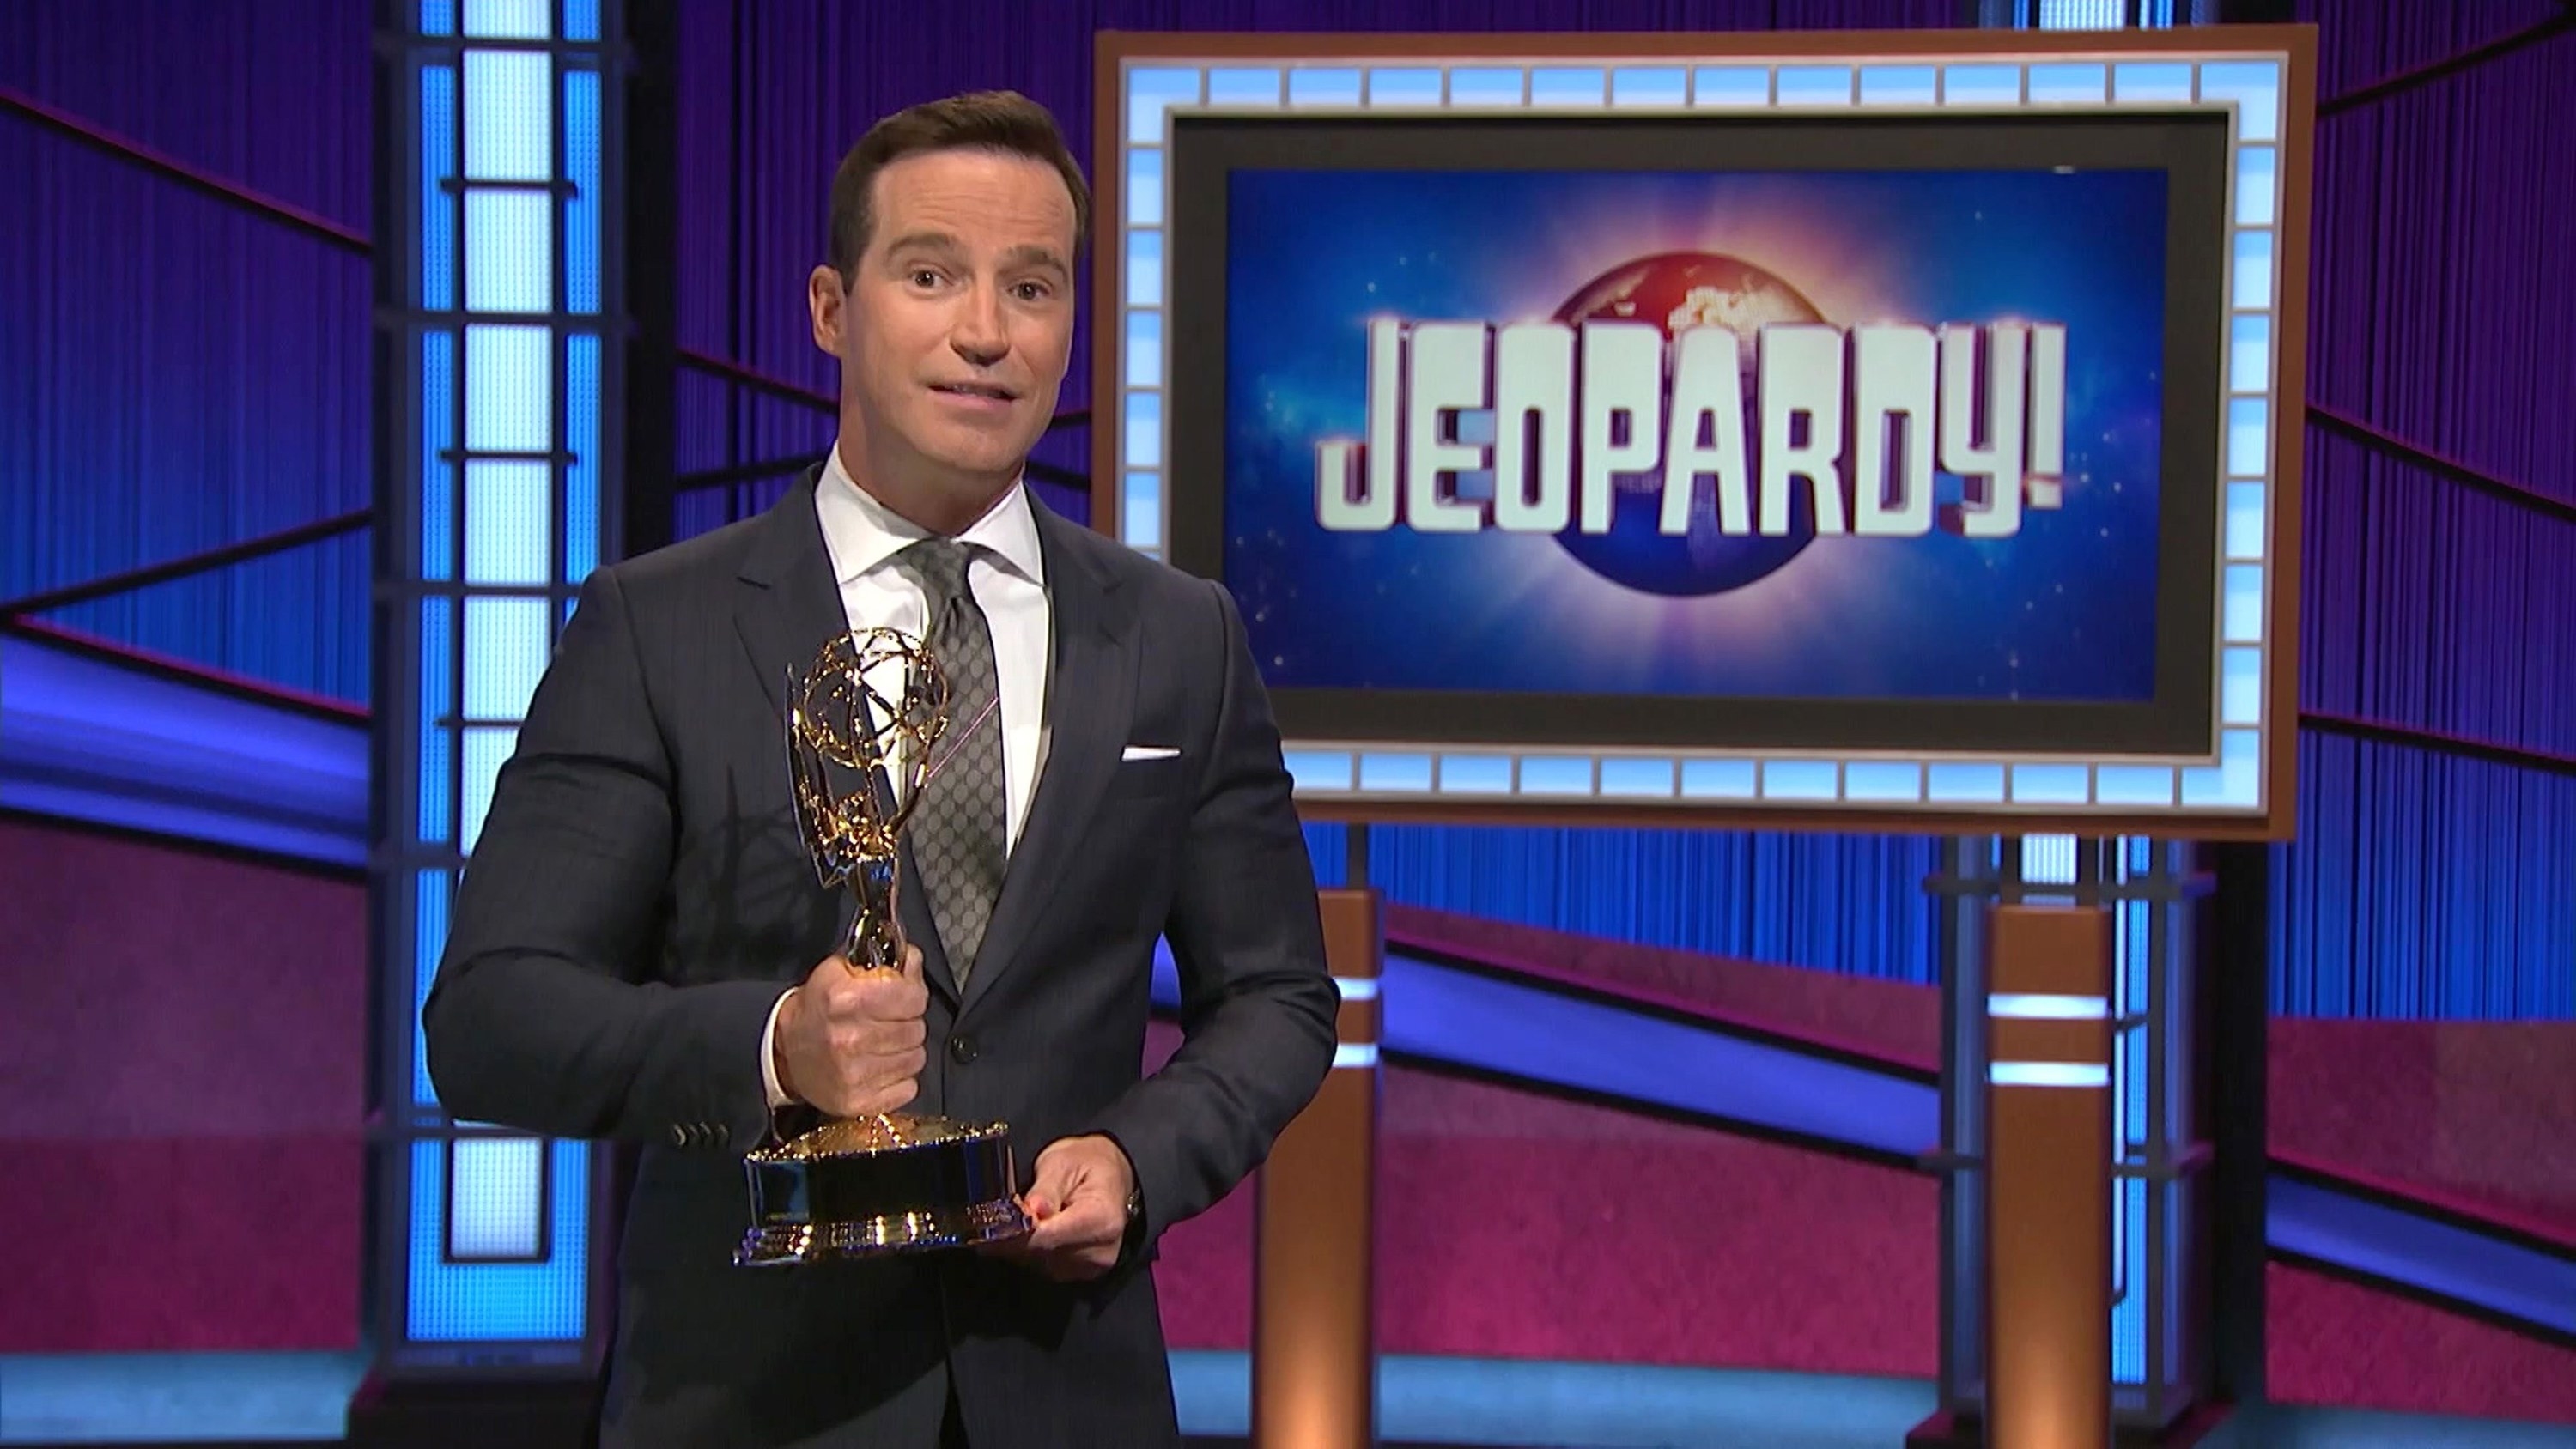 Photo of Mike Richards on the Jeopardy! set holding a daytime Emmy